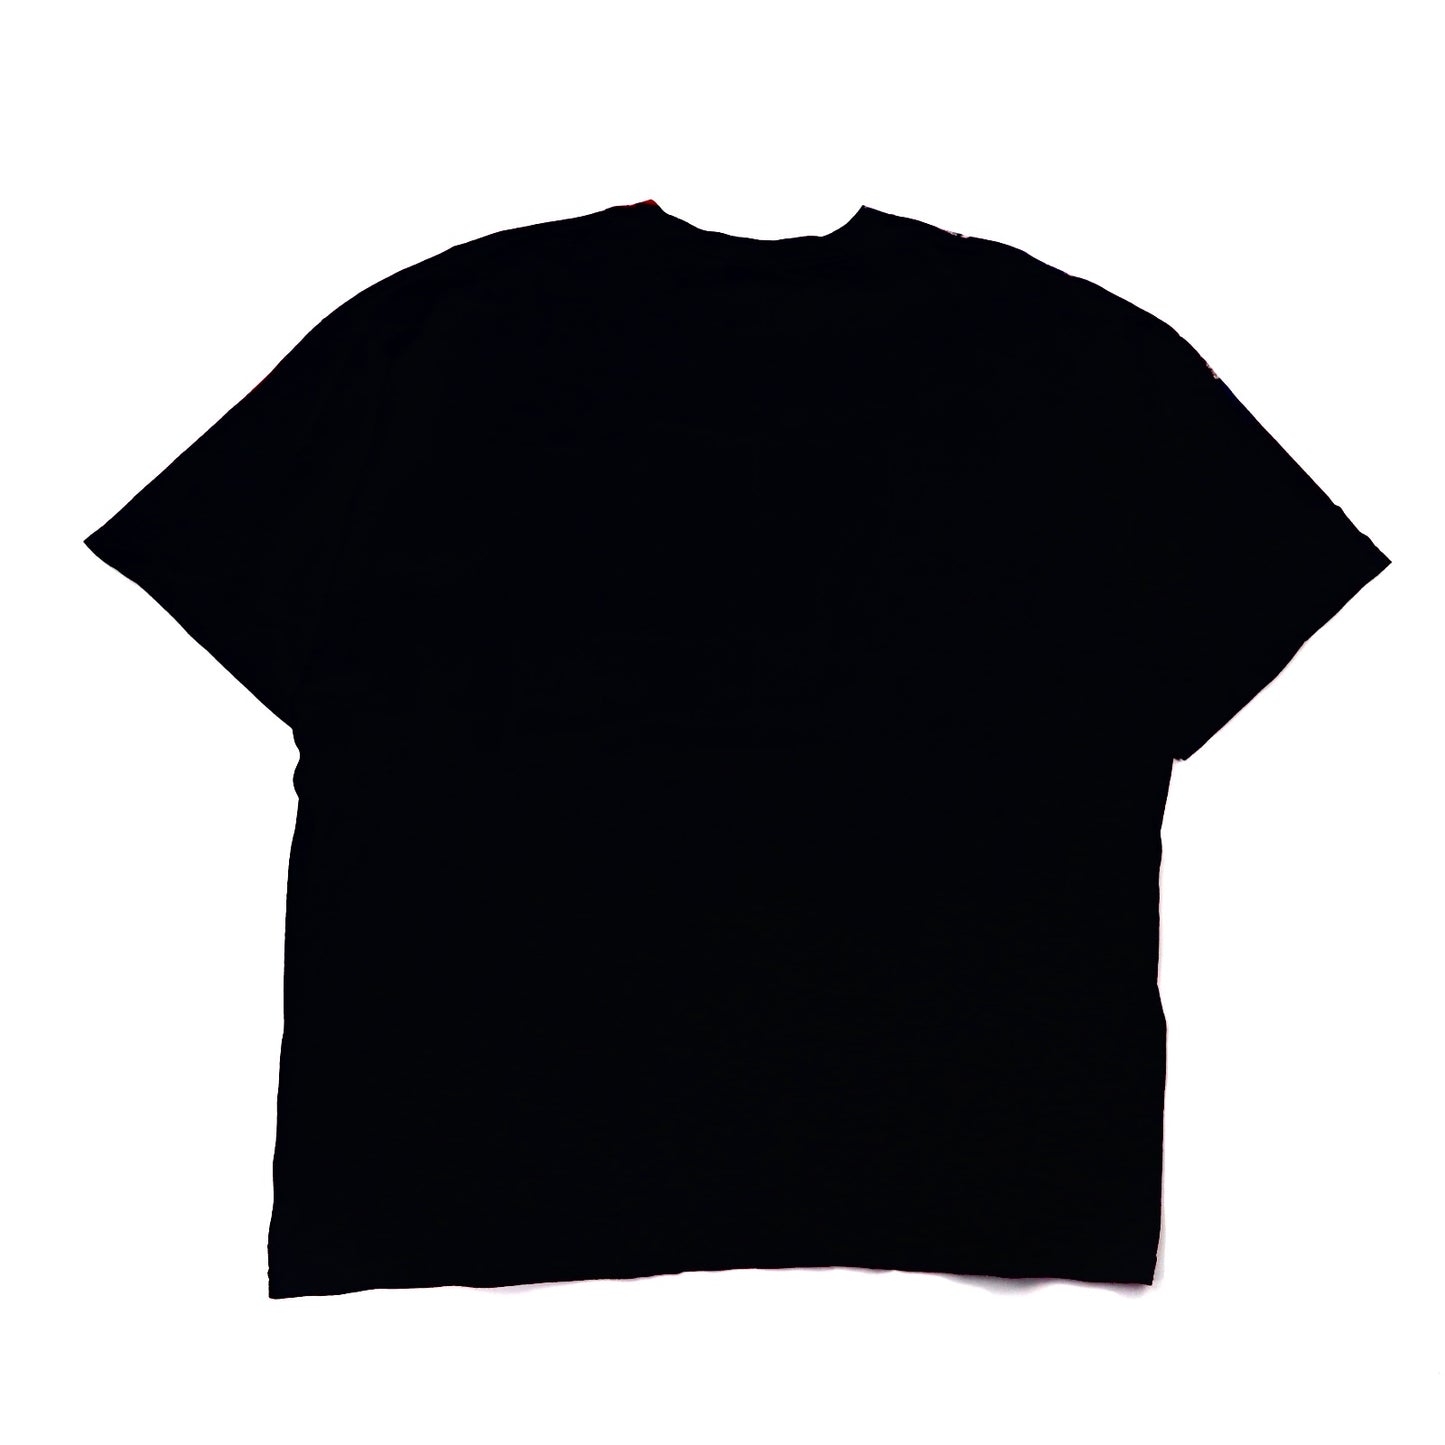 ODM IT’S ABOUT RHW ART Tシャツ 3XL ブラック 総柄 星条旗 ビッグサイズ